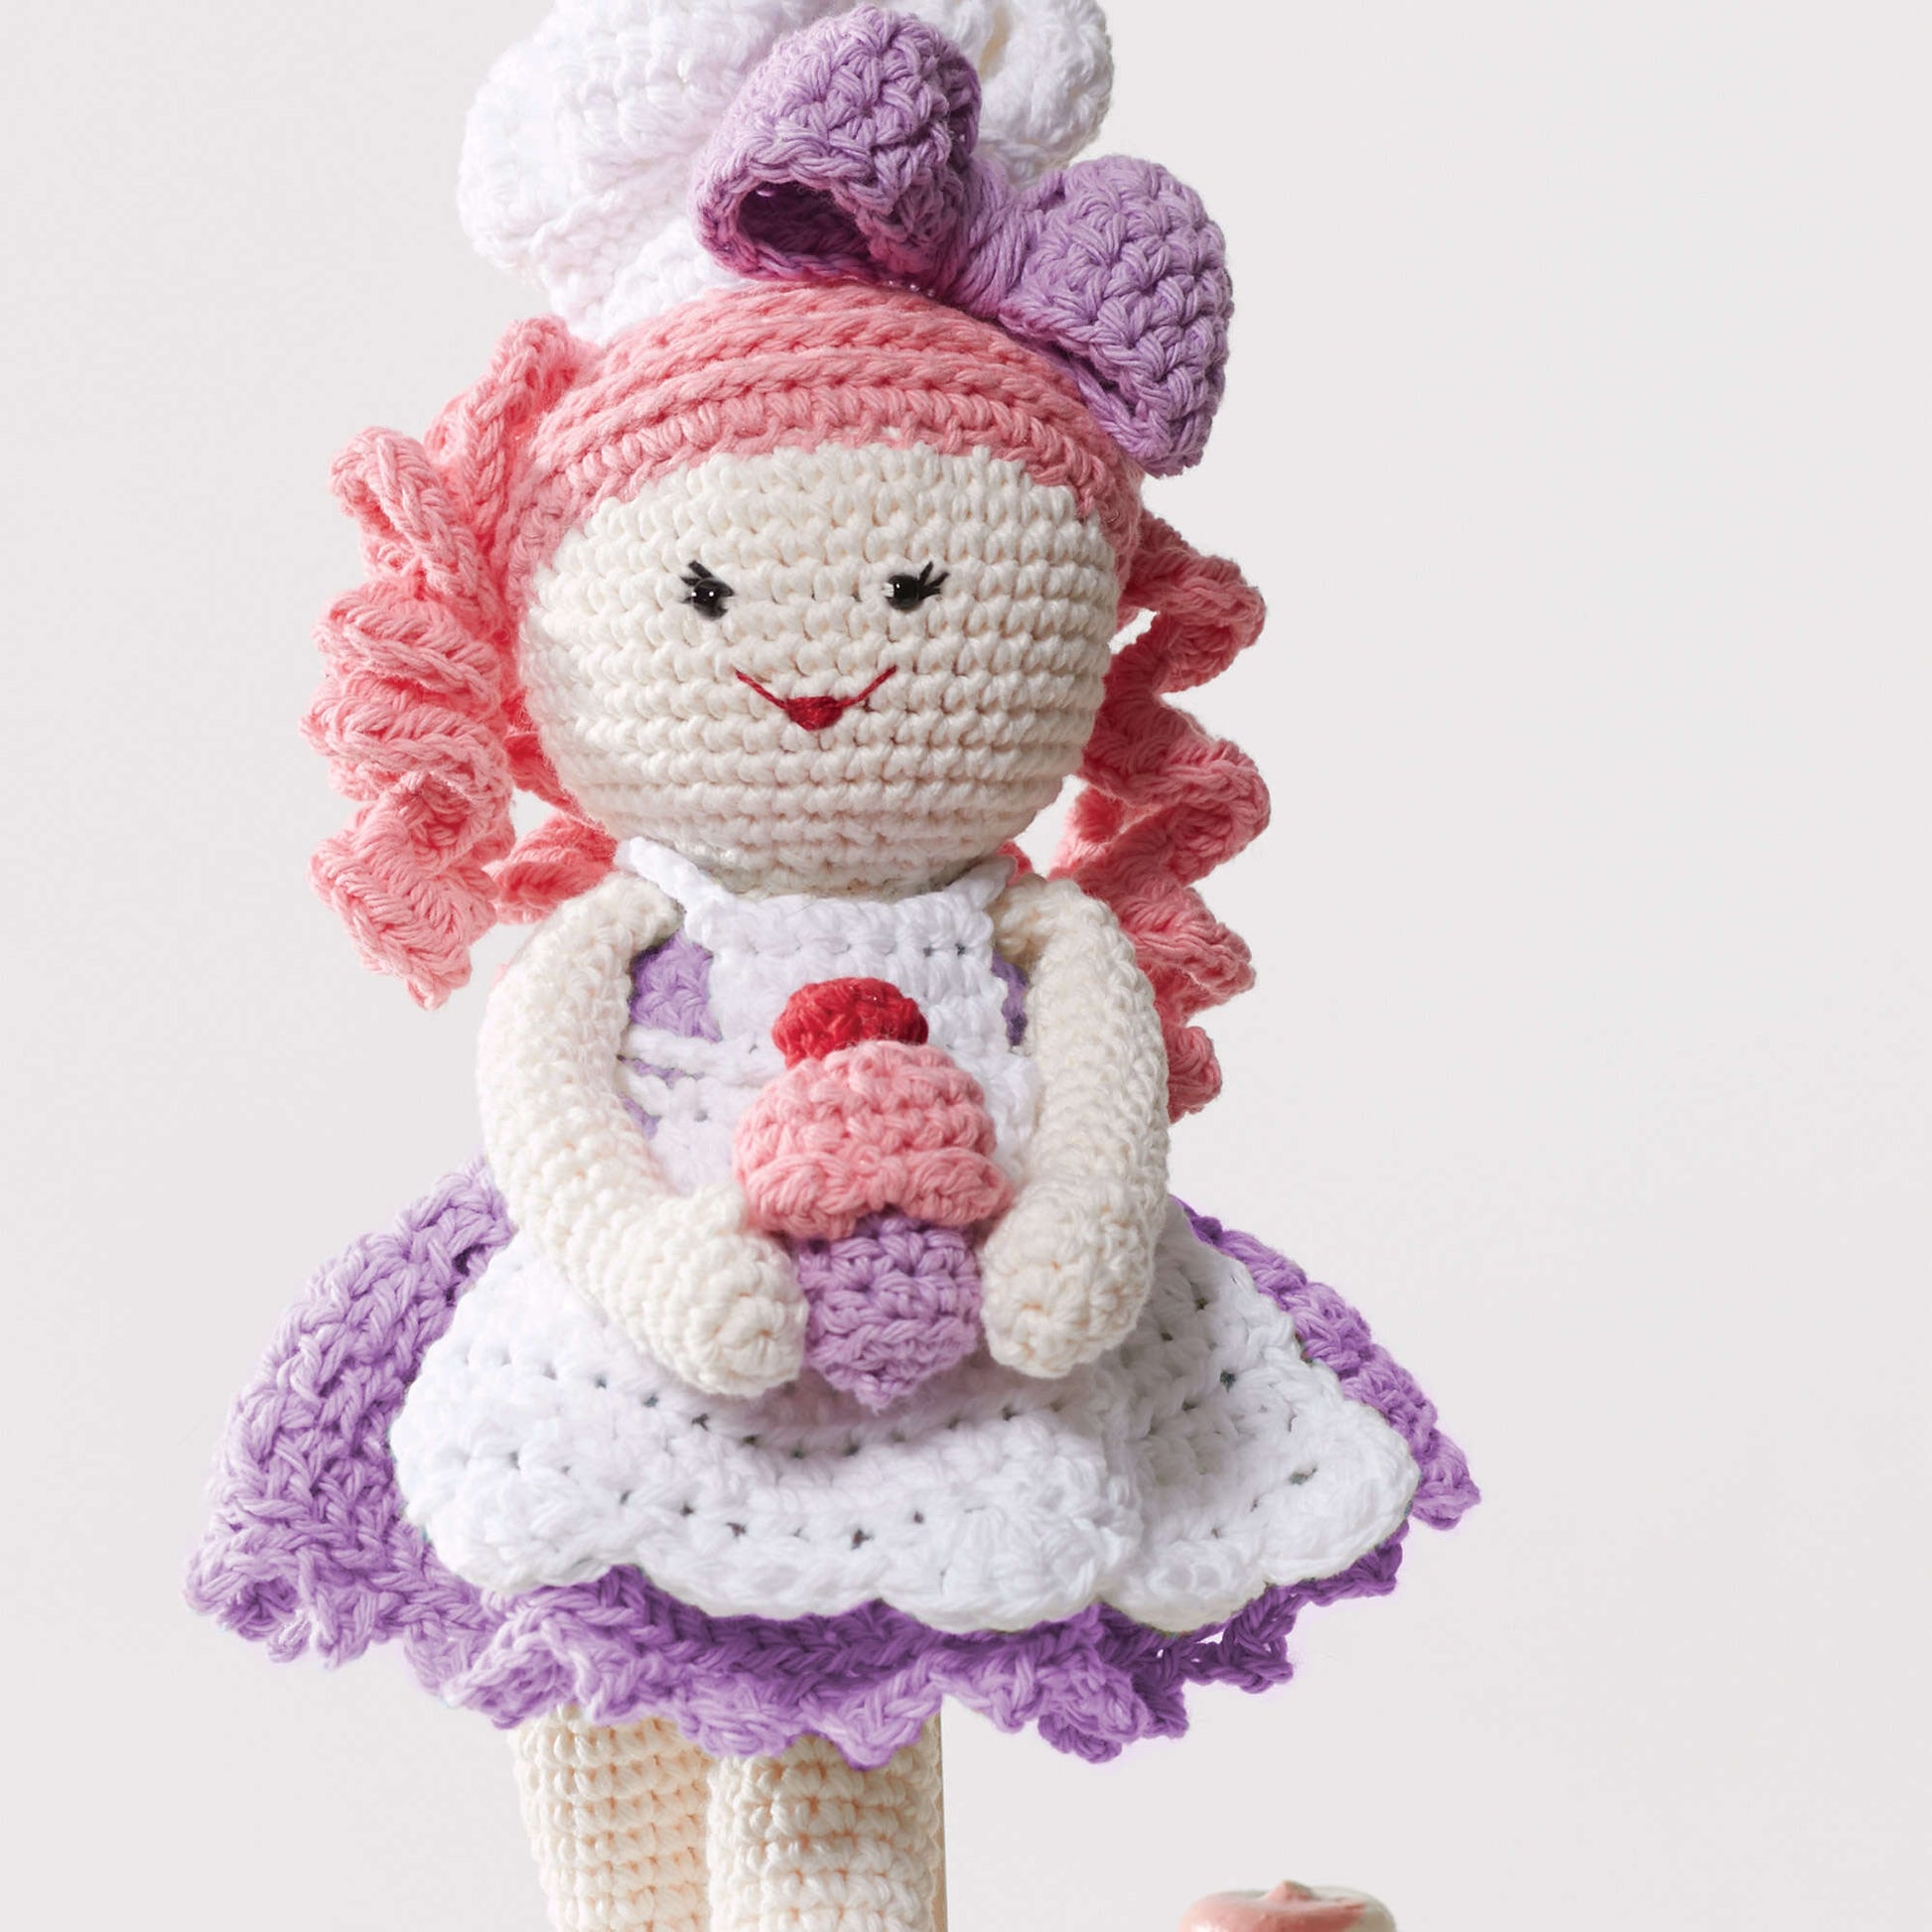 Crochet Doll Tutorial - Lily